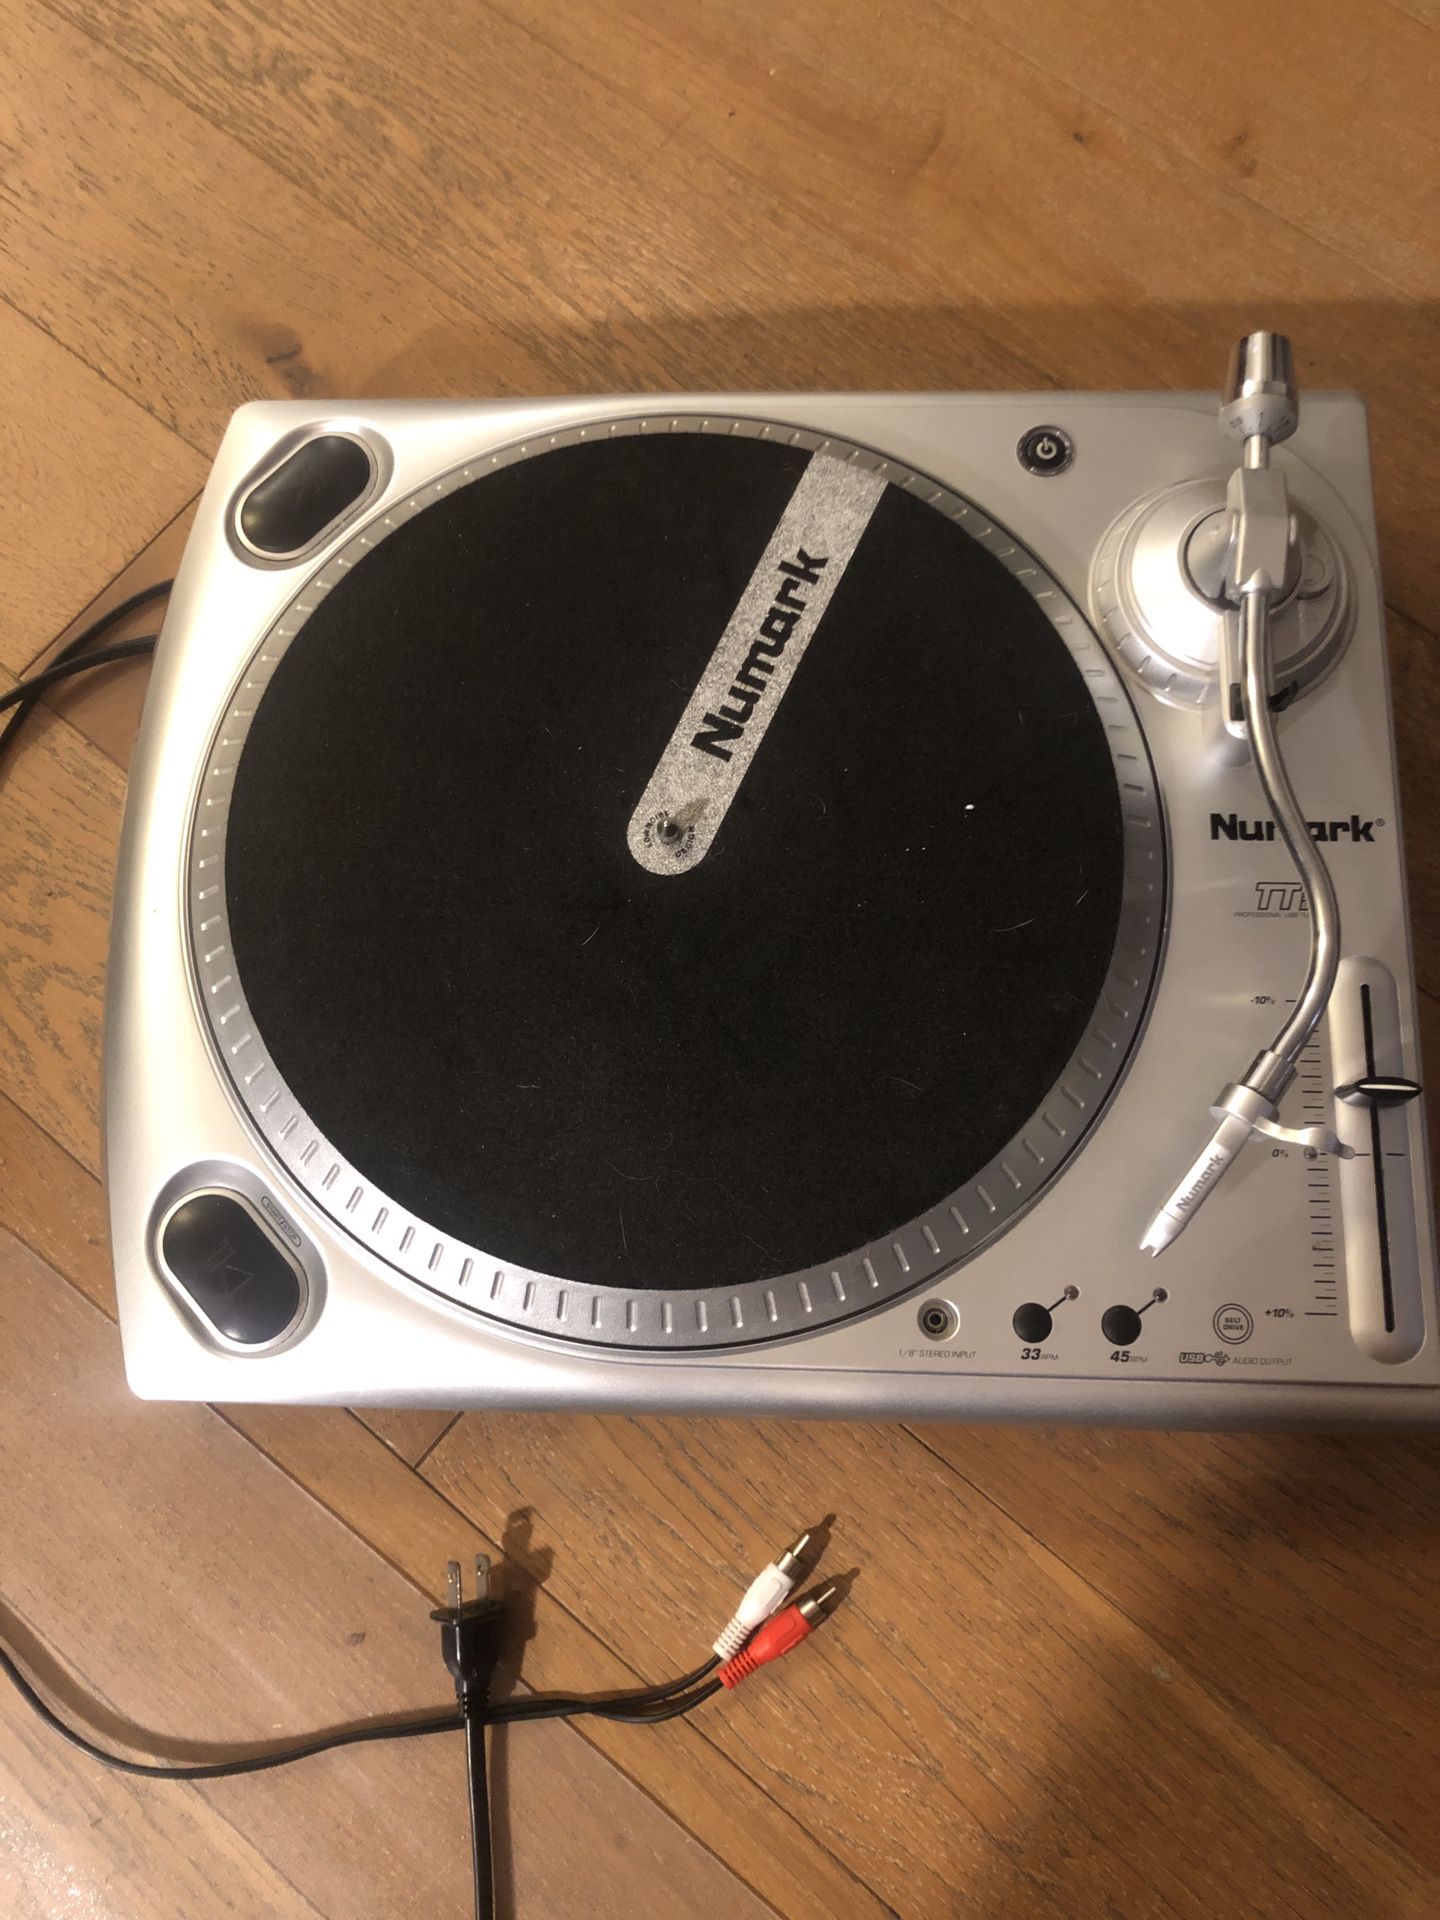 Numark TT DJ equipment - usb connector